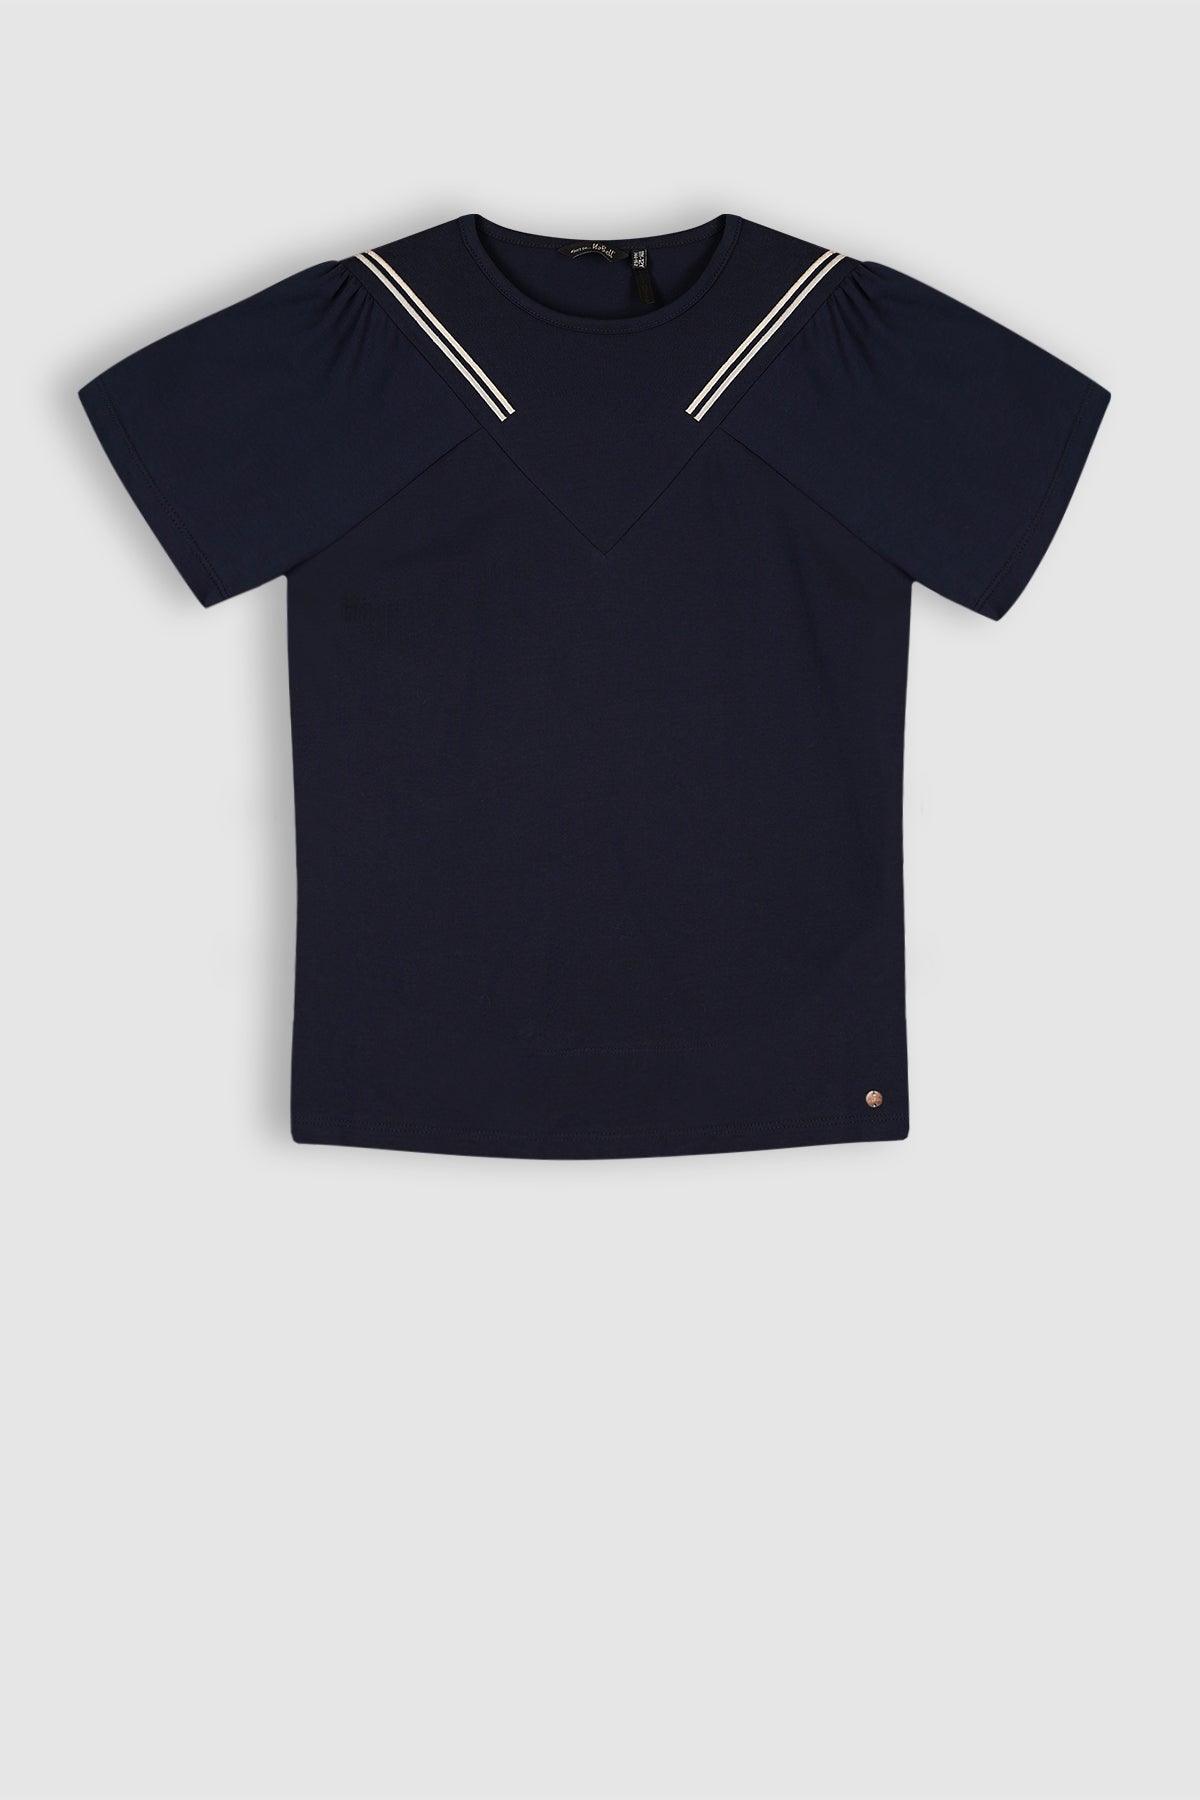 Koala Tshirt VShape Detail Navy Blazer - NoNo Kidswear